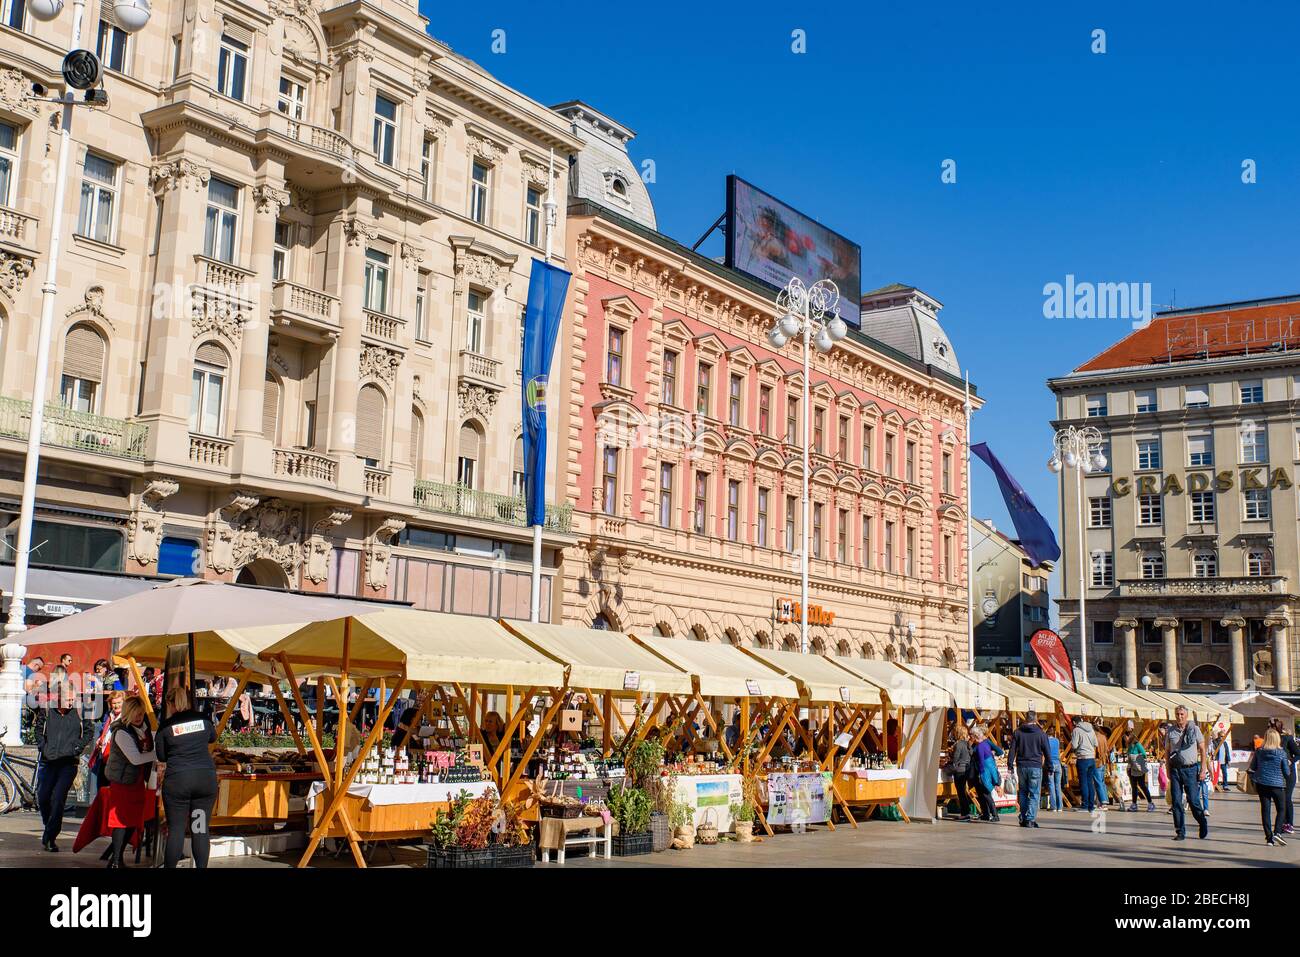 The market on Ban Jelačić Square, the central square of the city of Zagreb, Croatia Stock Photo